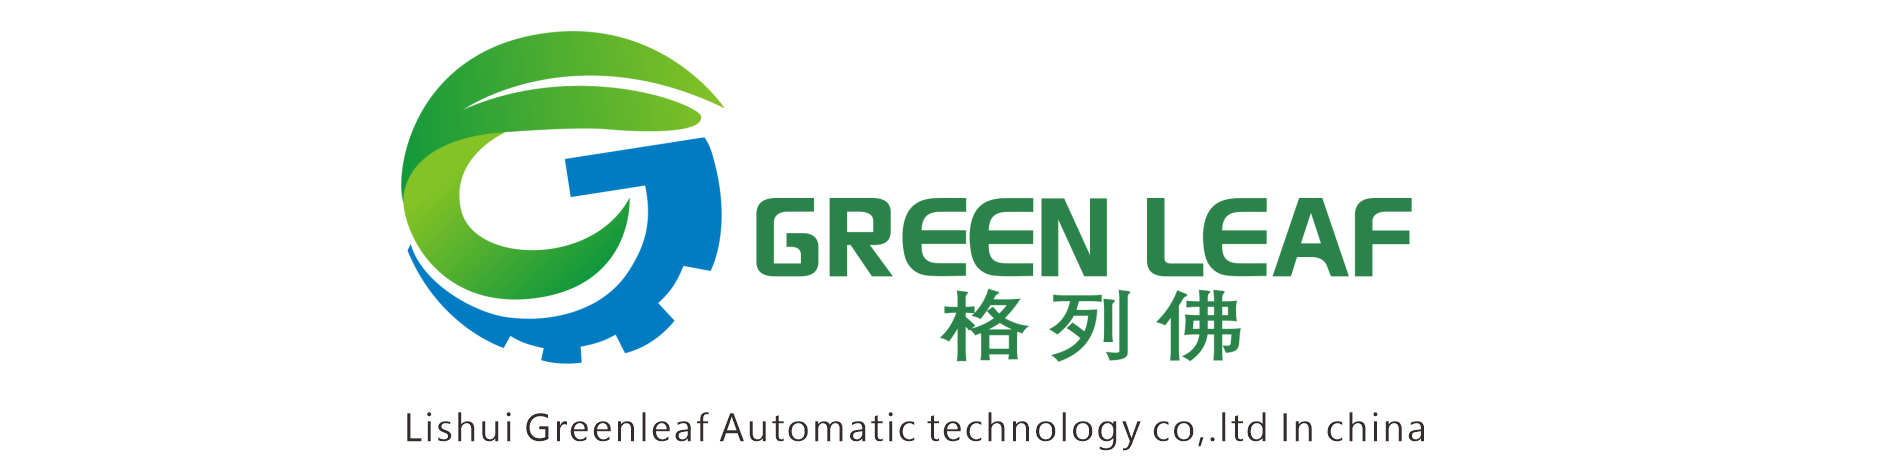 Lishui Greenleaf Automatic Technology Co., Ltd.